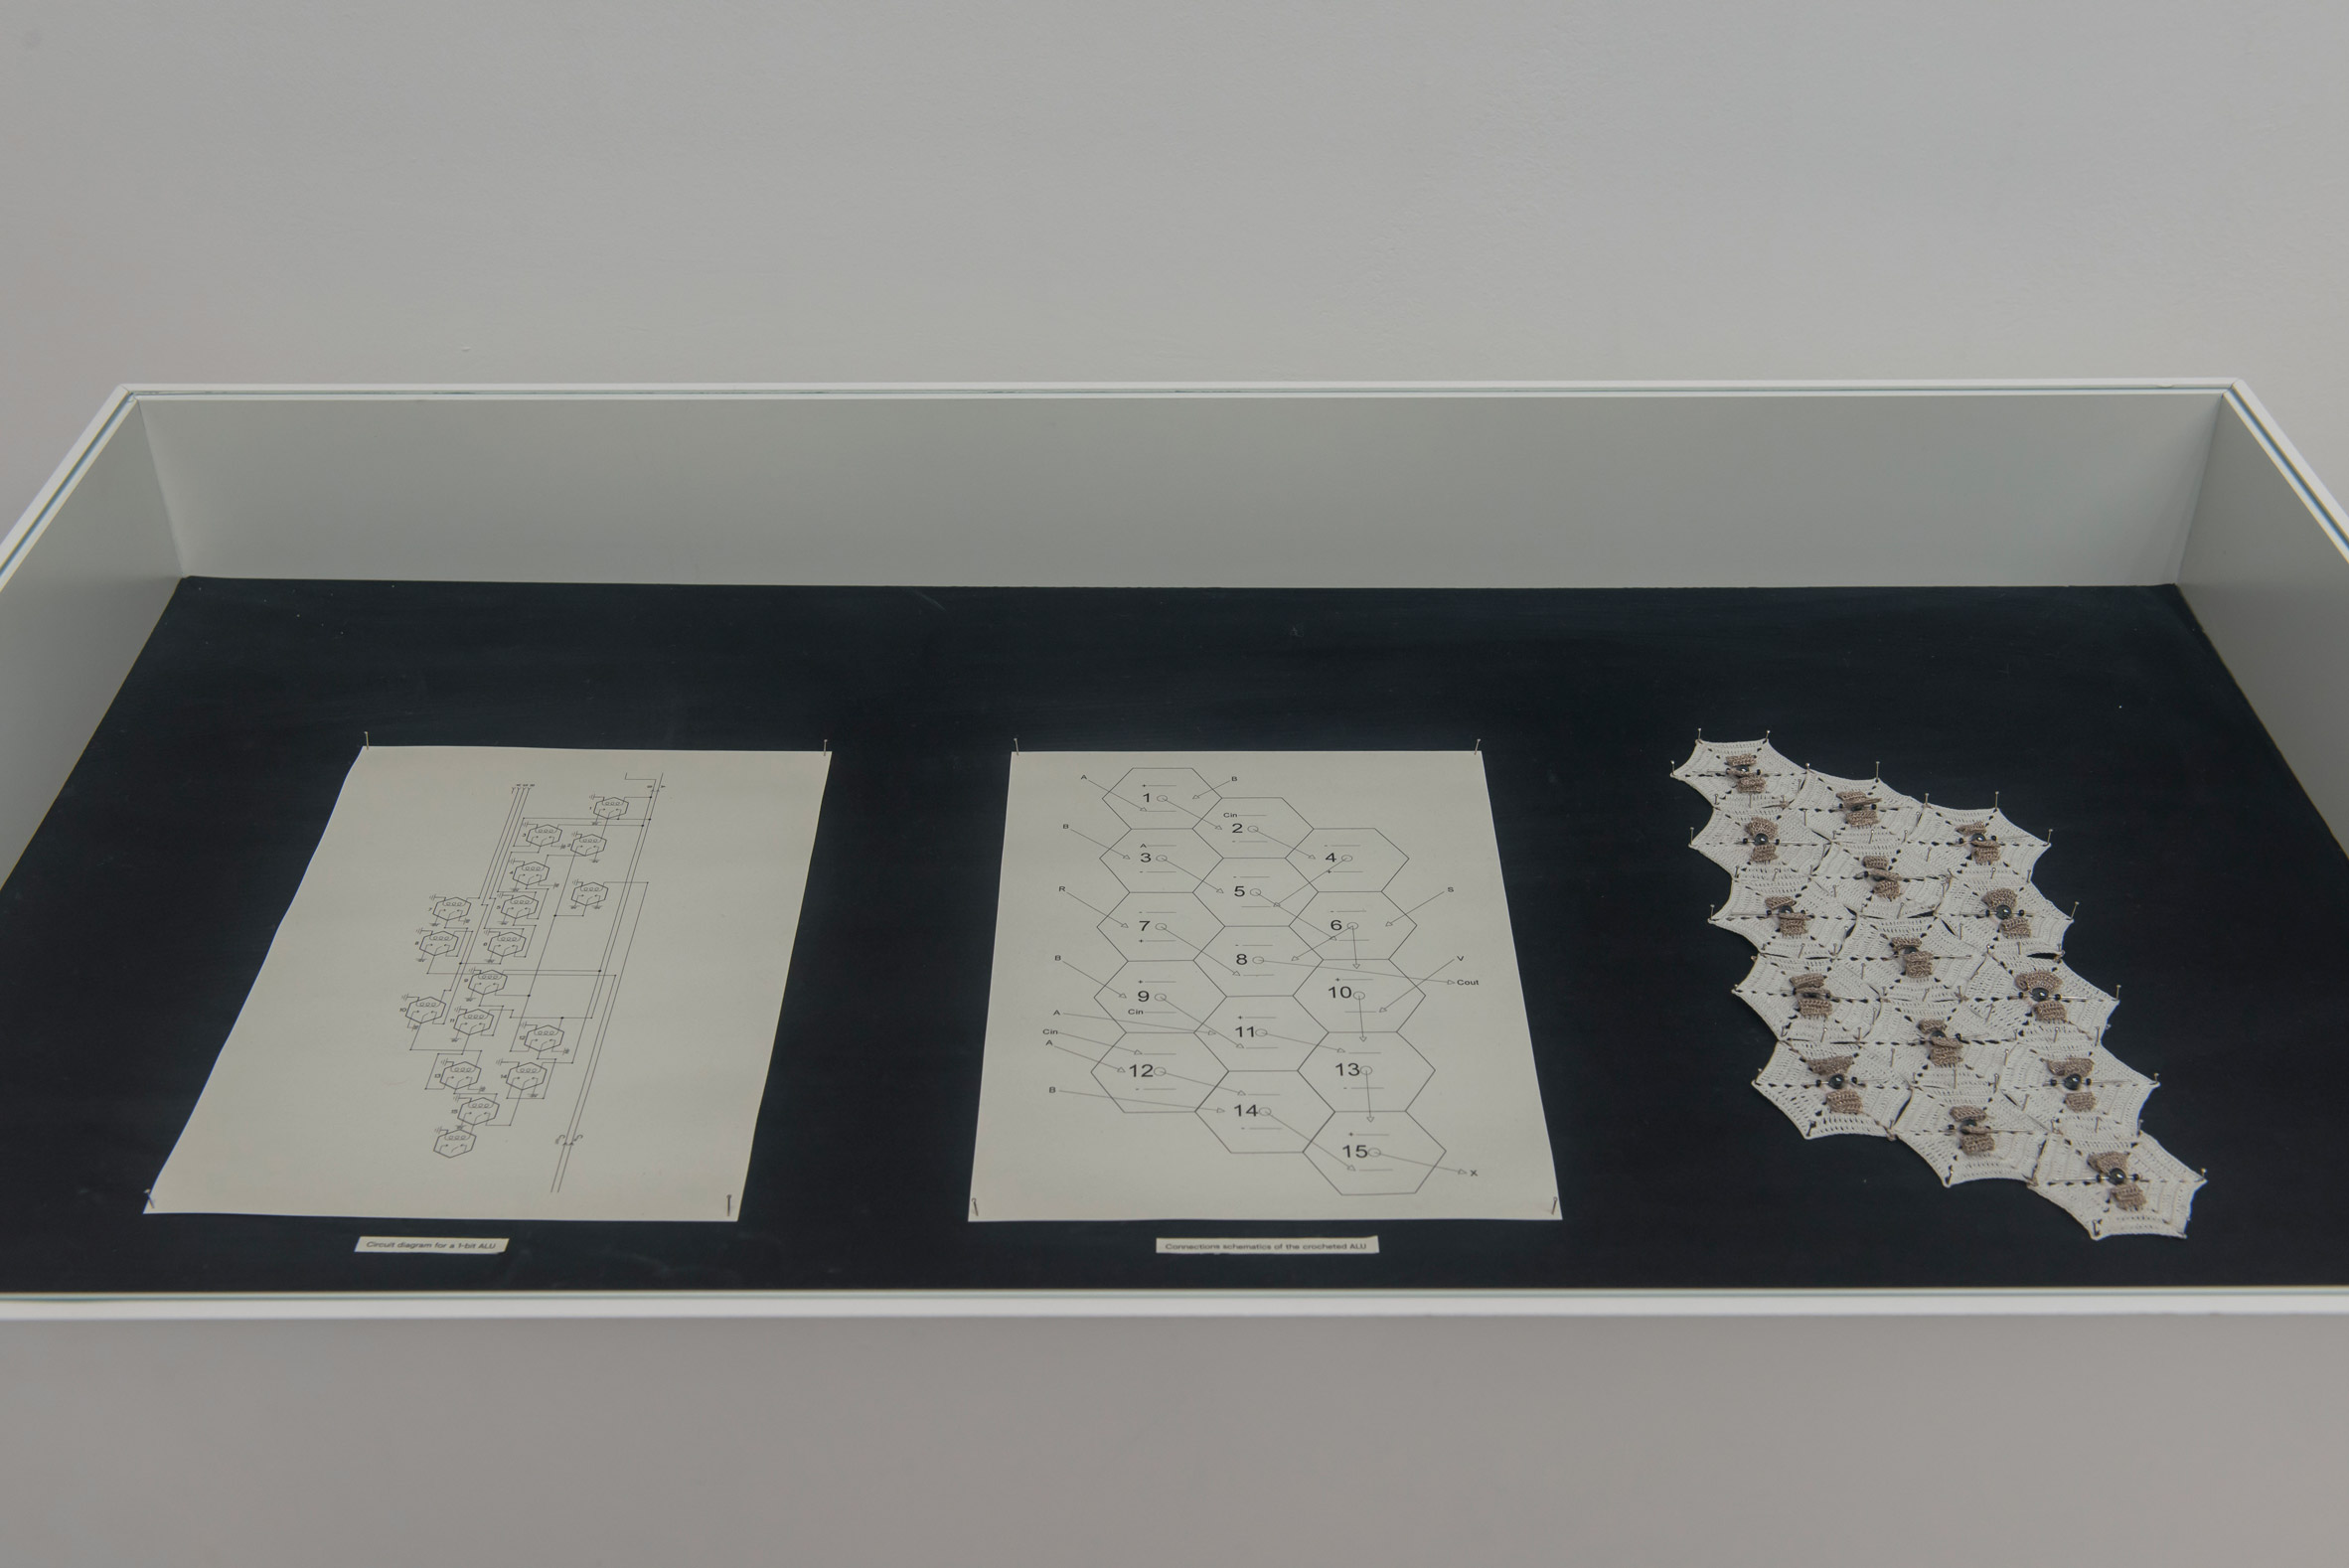 Stitching Worlds by Ebru Kurbak at the Istanbul Design Biennial